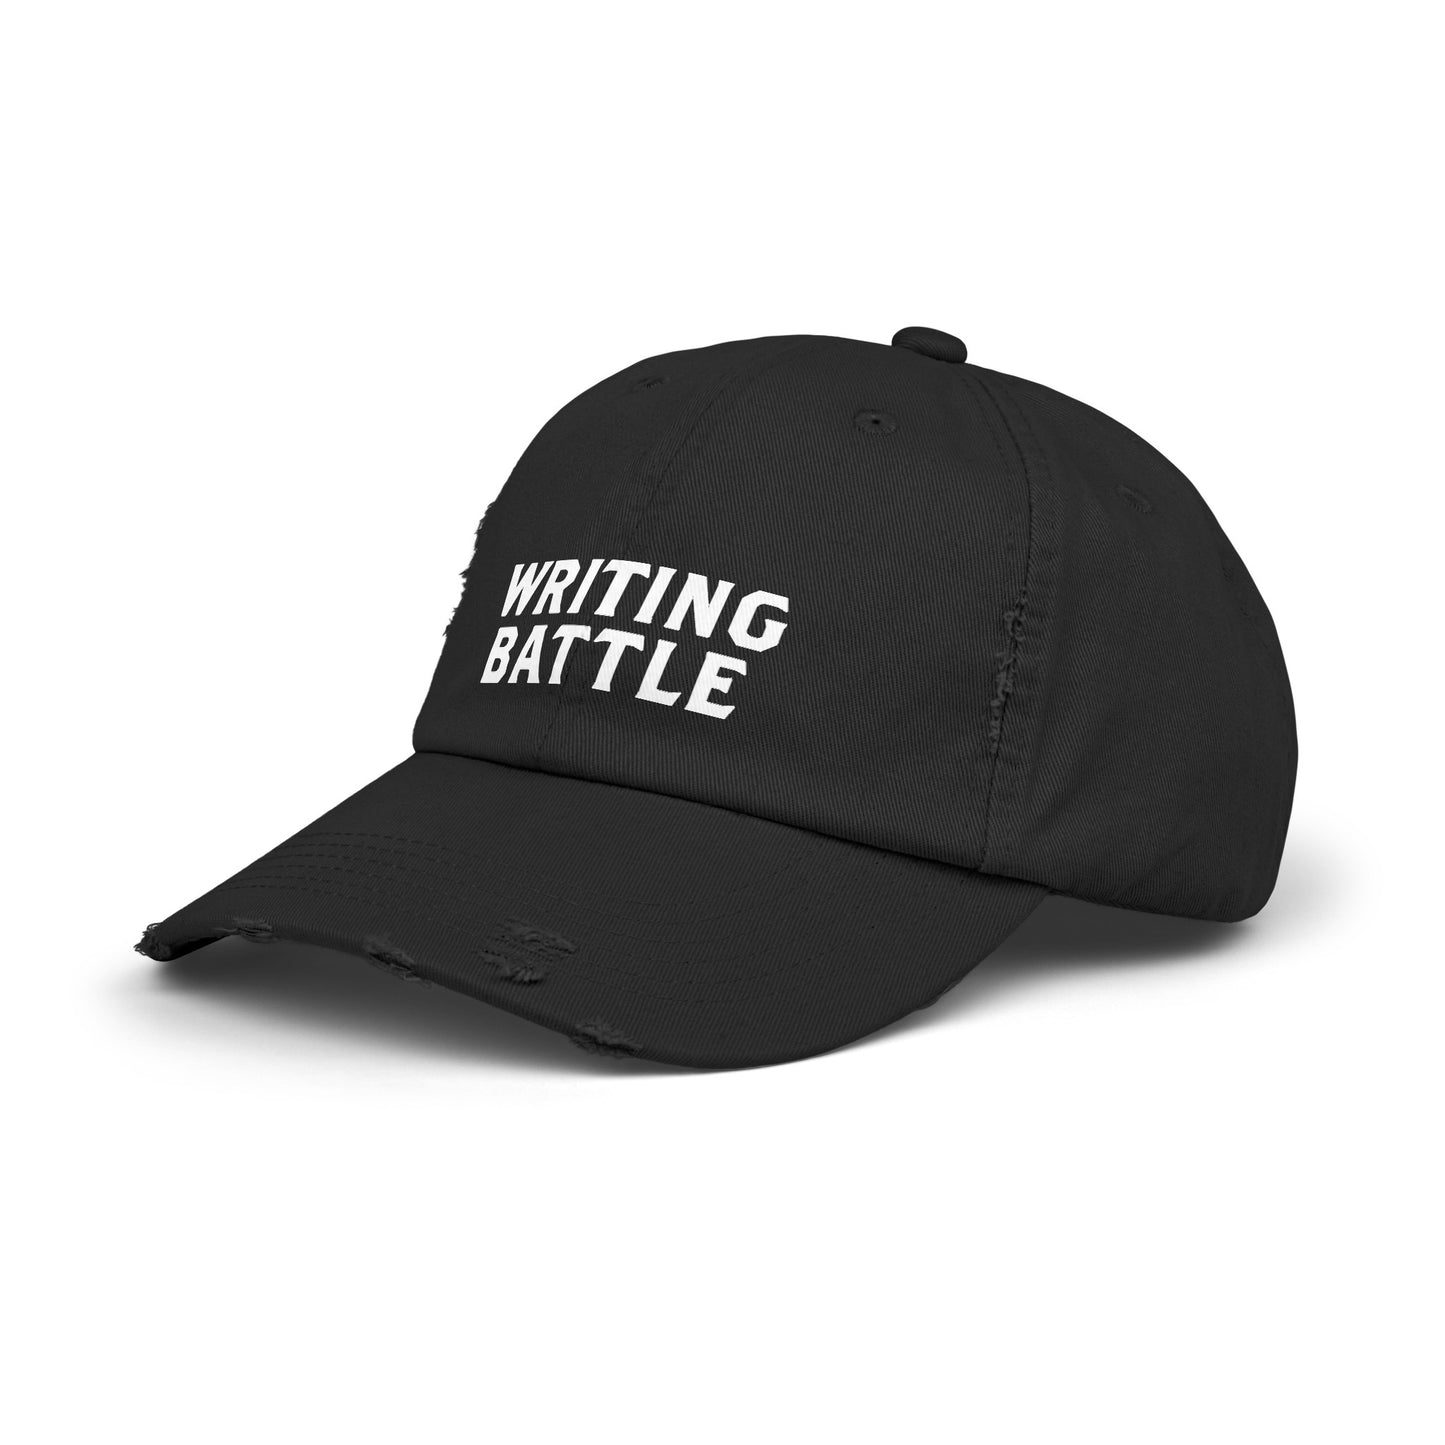 Writing Battle Distressed Cap - USA